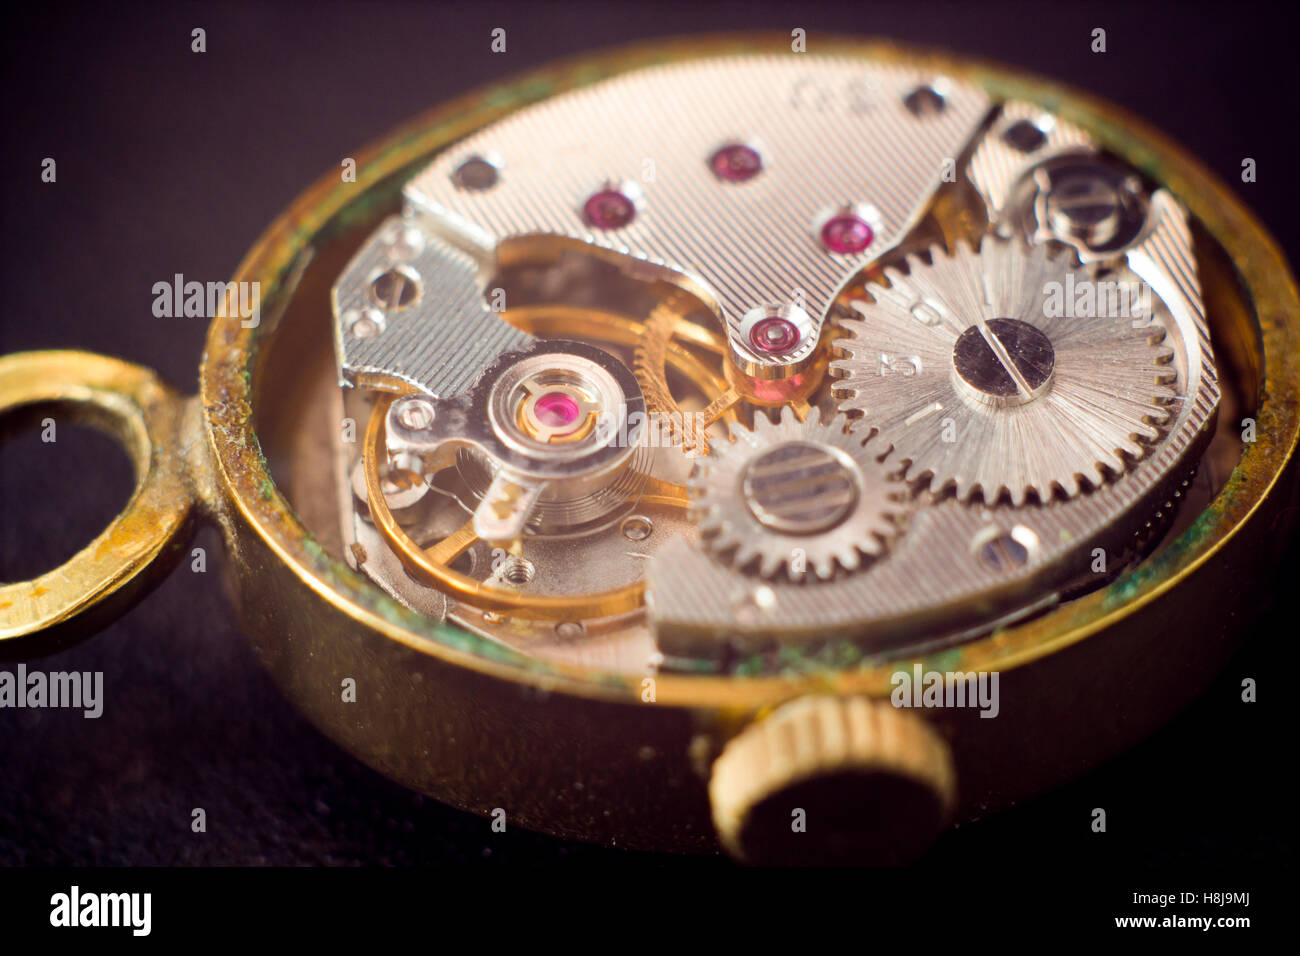 Old analogue clock mechanism Stock Photo